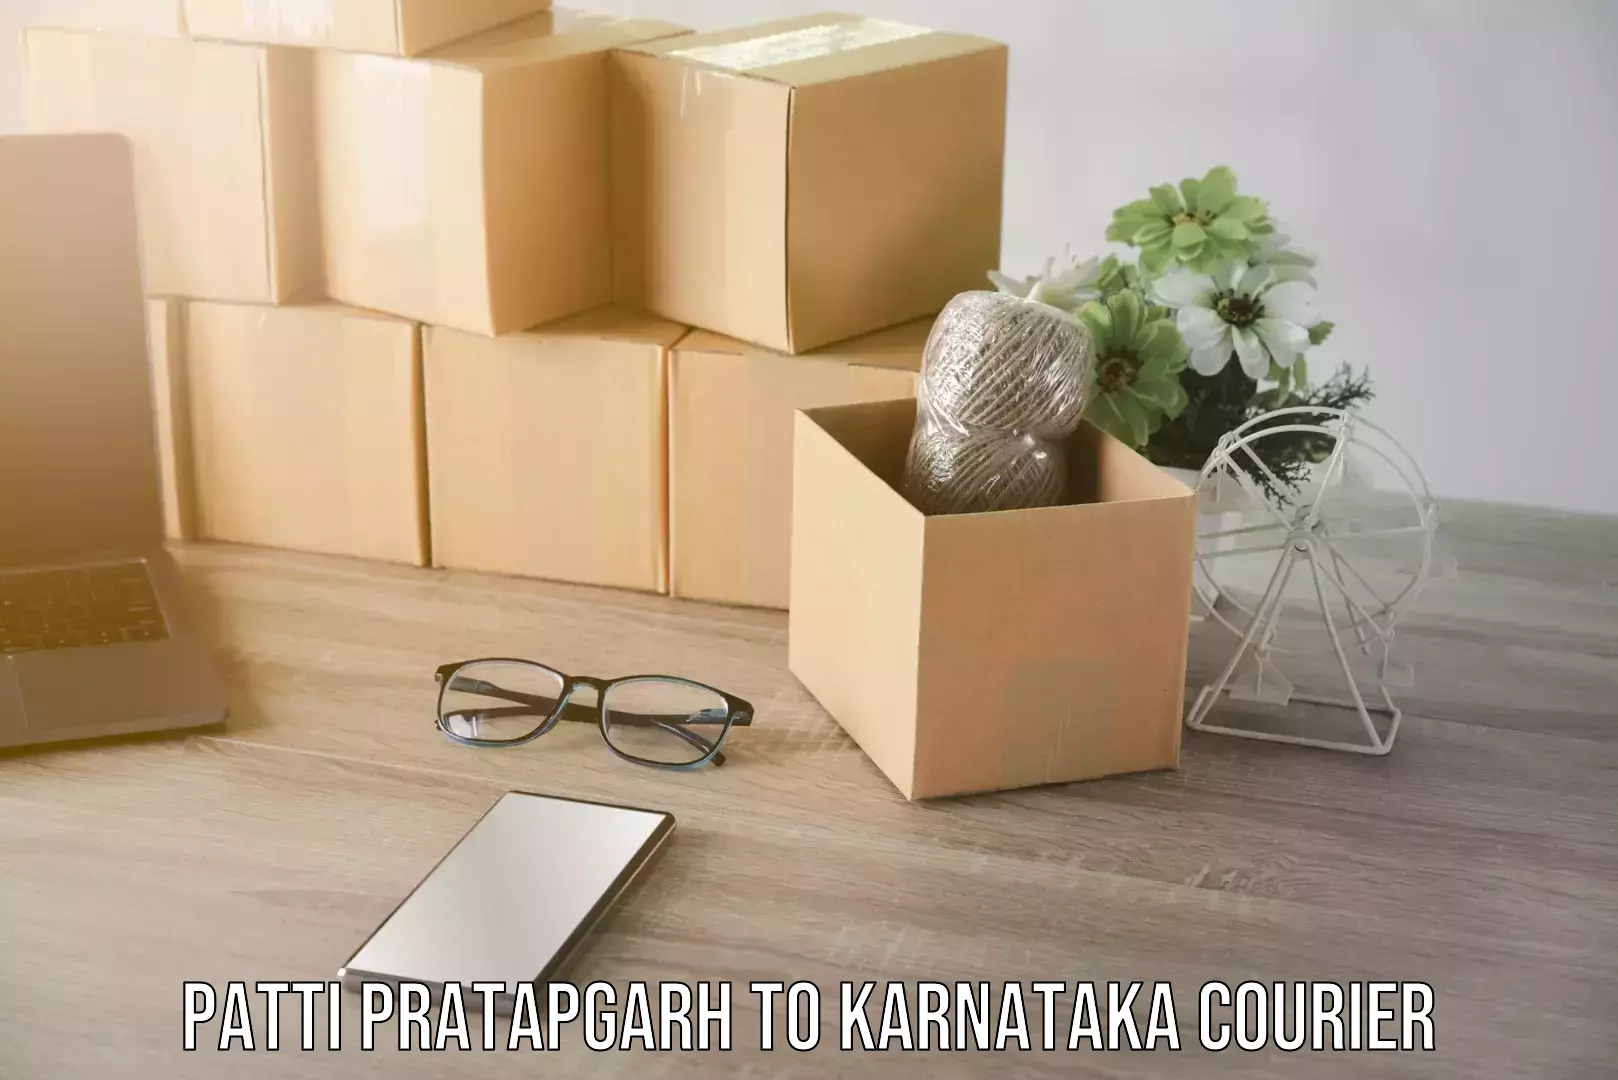 Hassle-free relocation Patti Pratapgarh to Karnataka